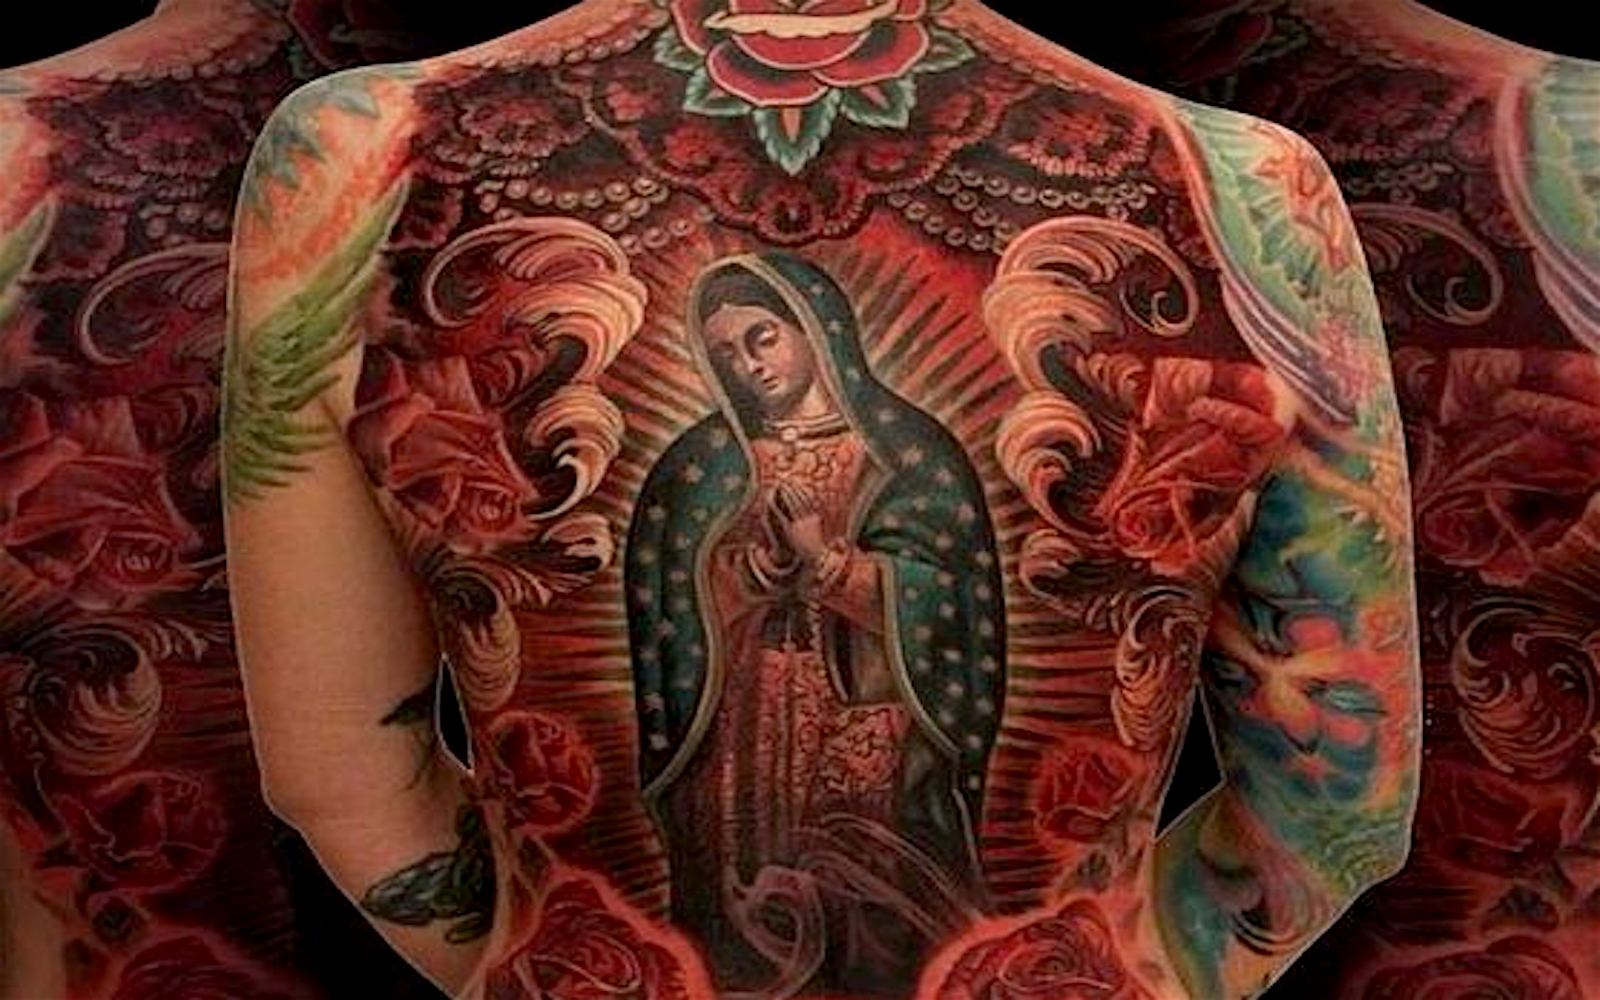 Tatuajes de la Virgen de Guadalupe - Virgen de Guadalupe tat